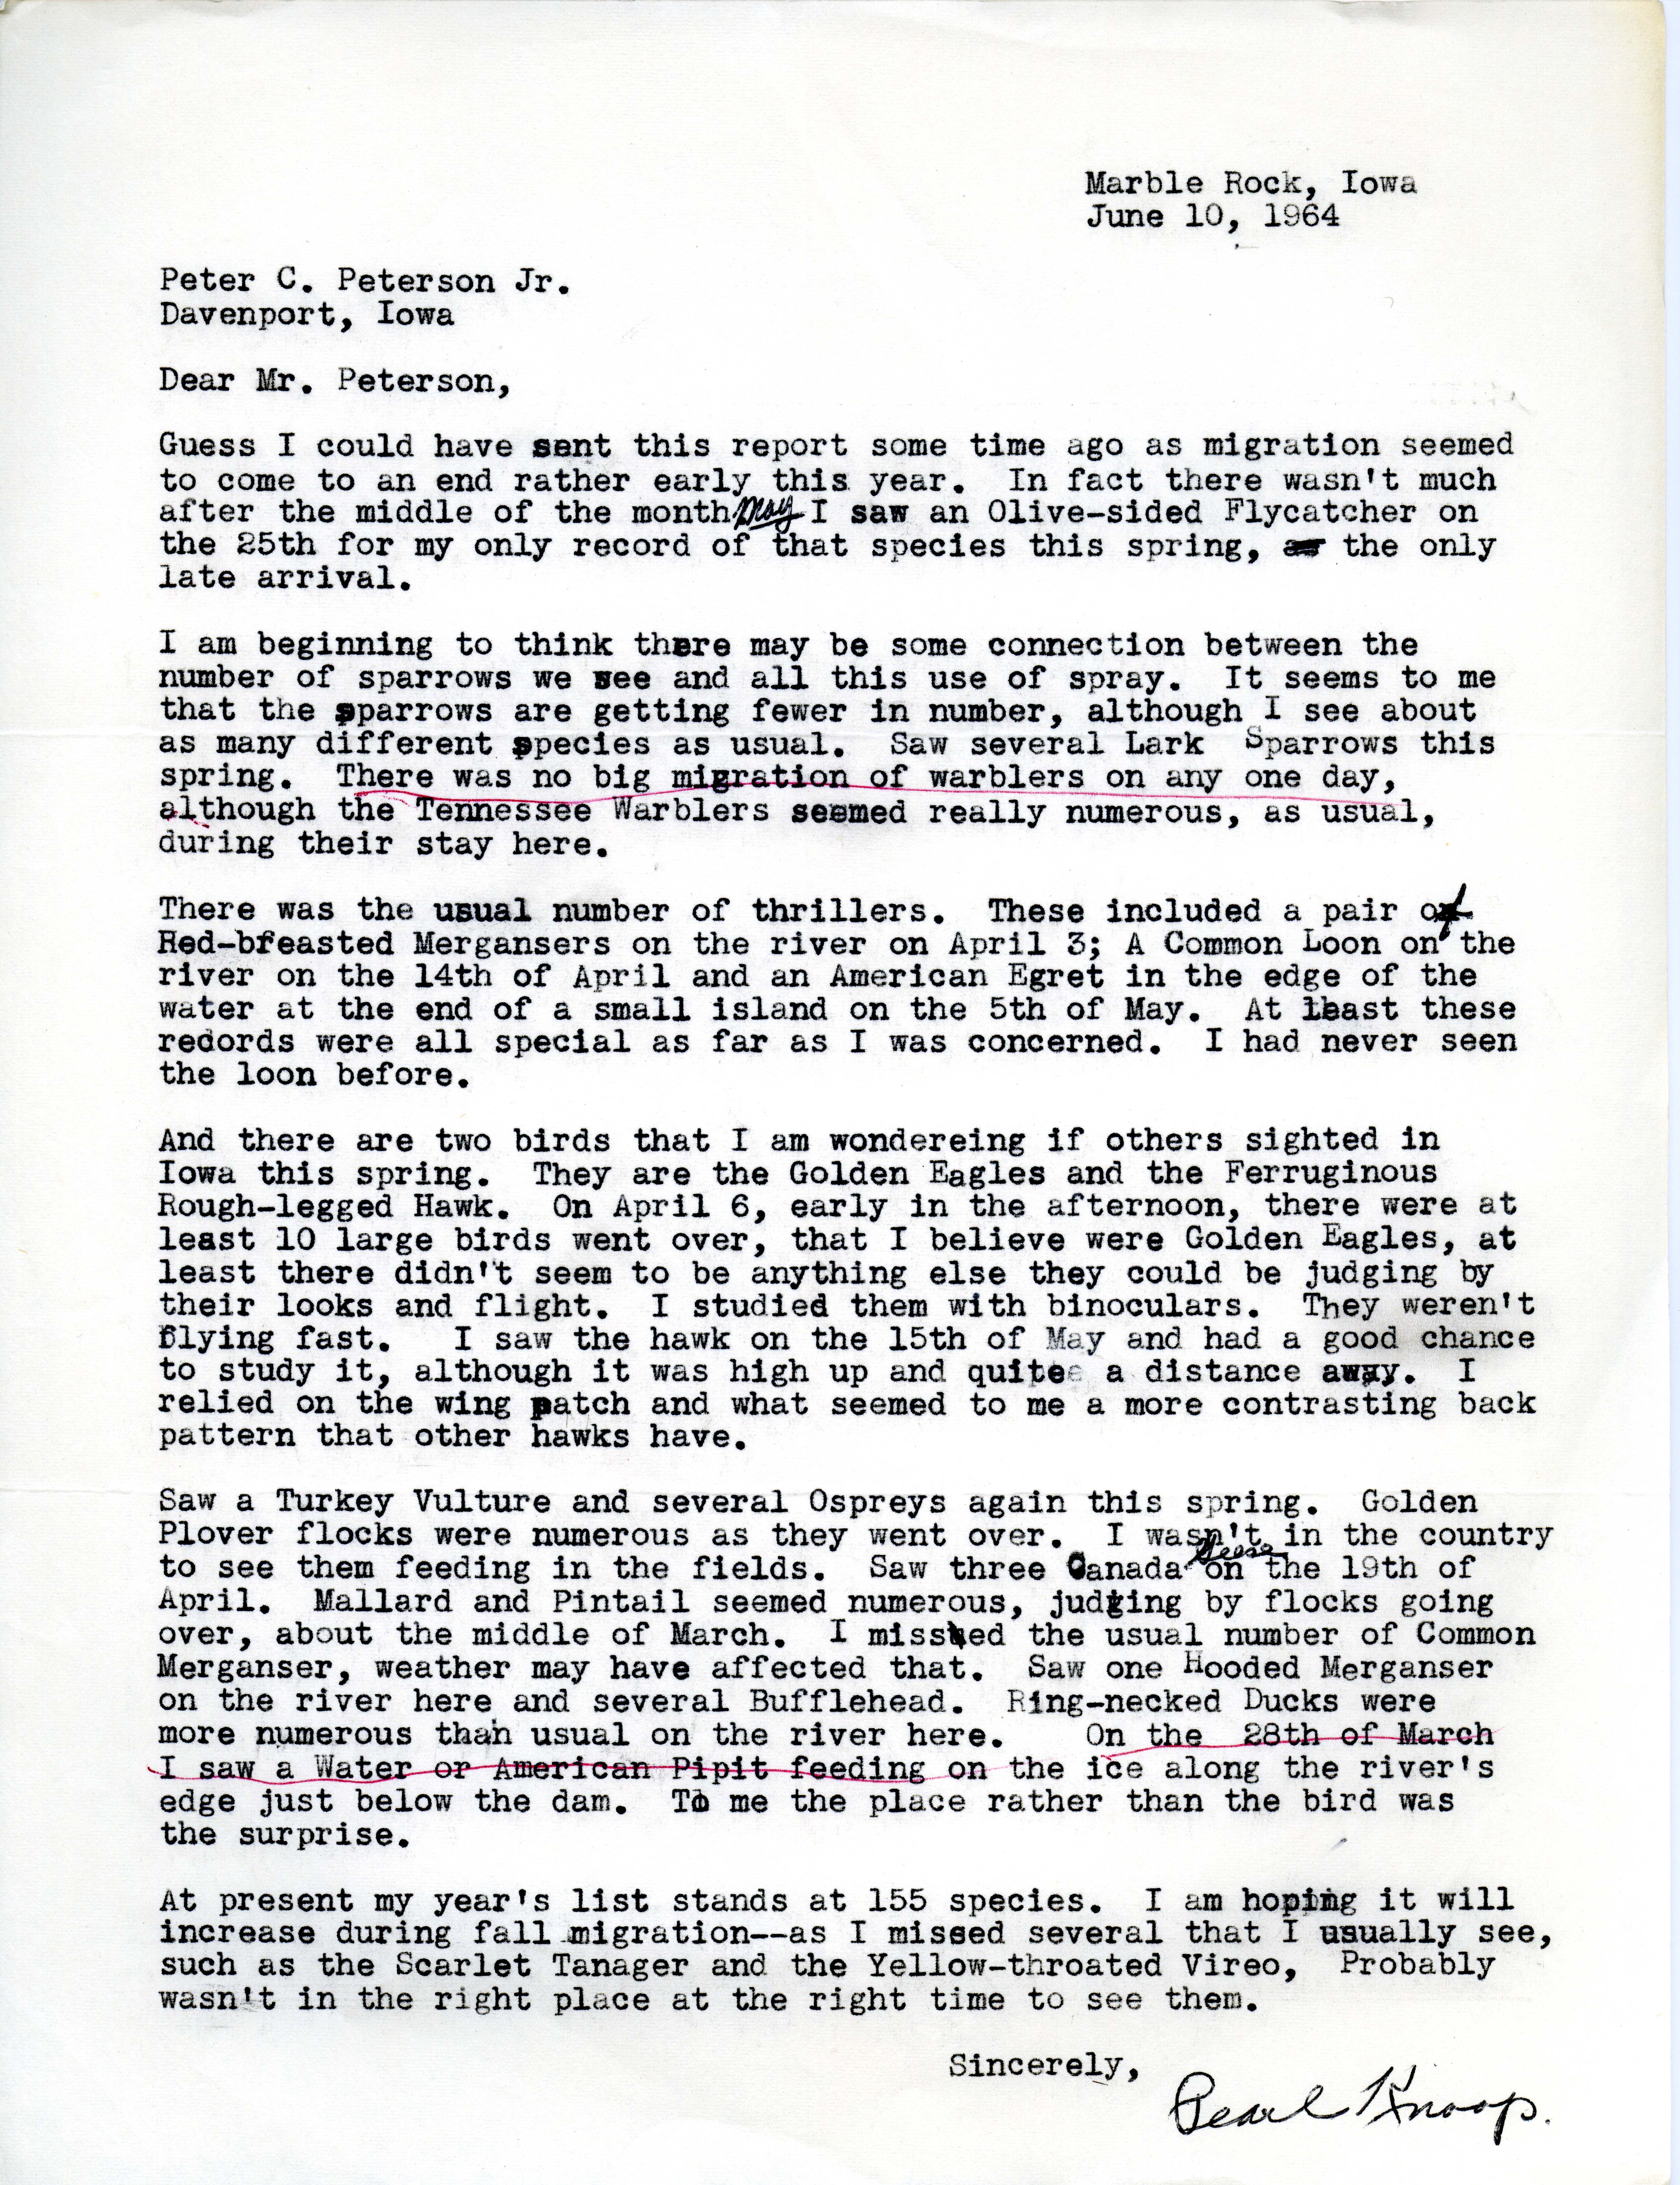 Pearl Knoop letter to Peter C. Petersen regarding bird sightings, June 10, 1964